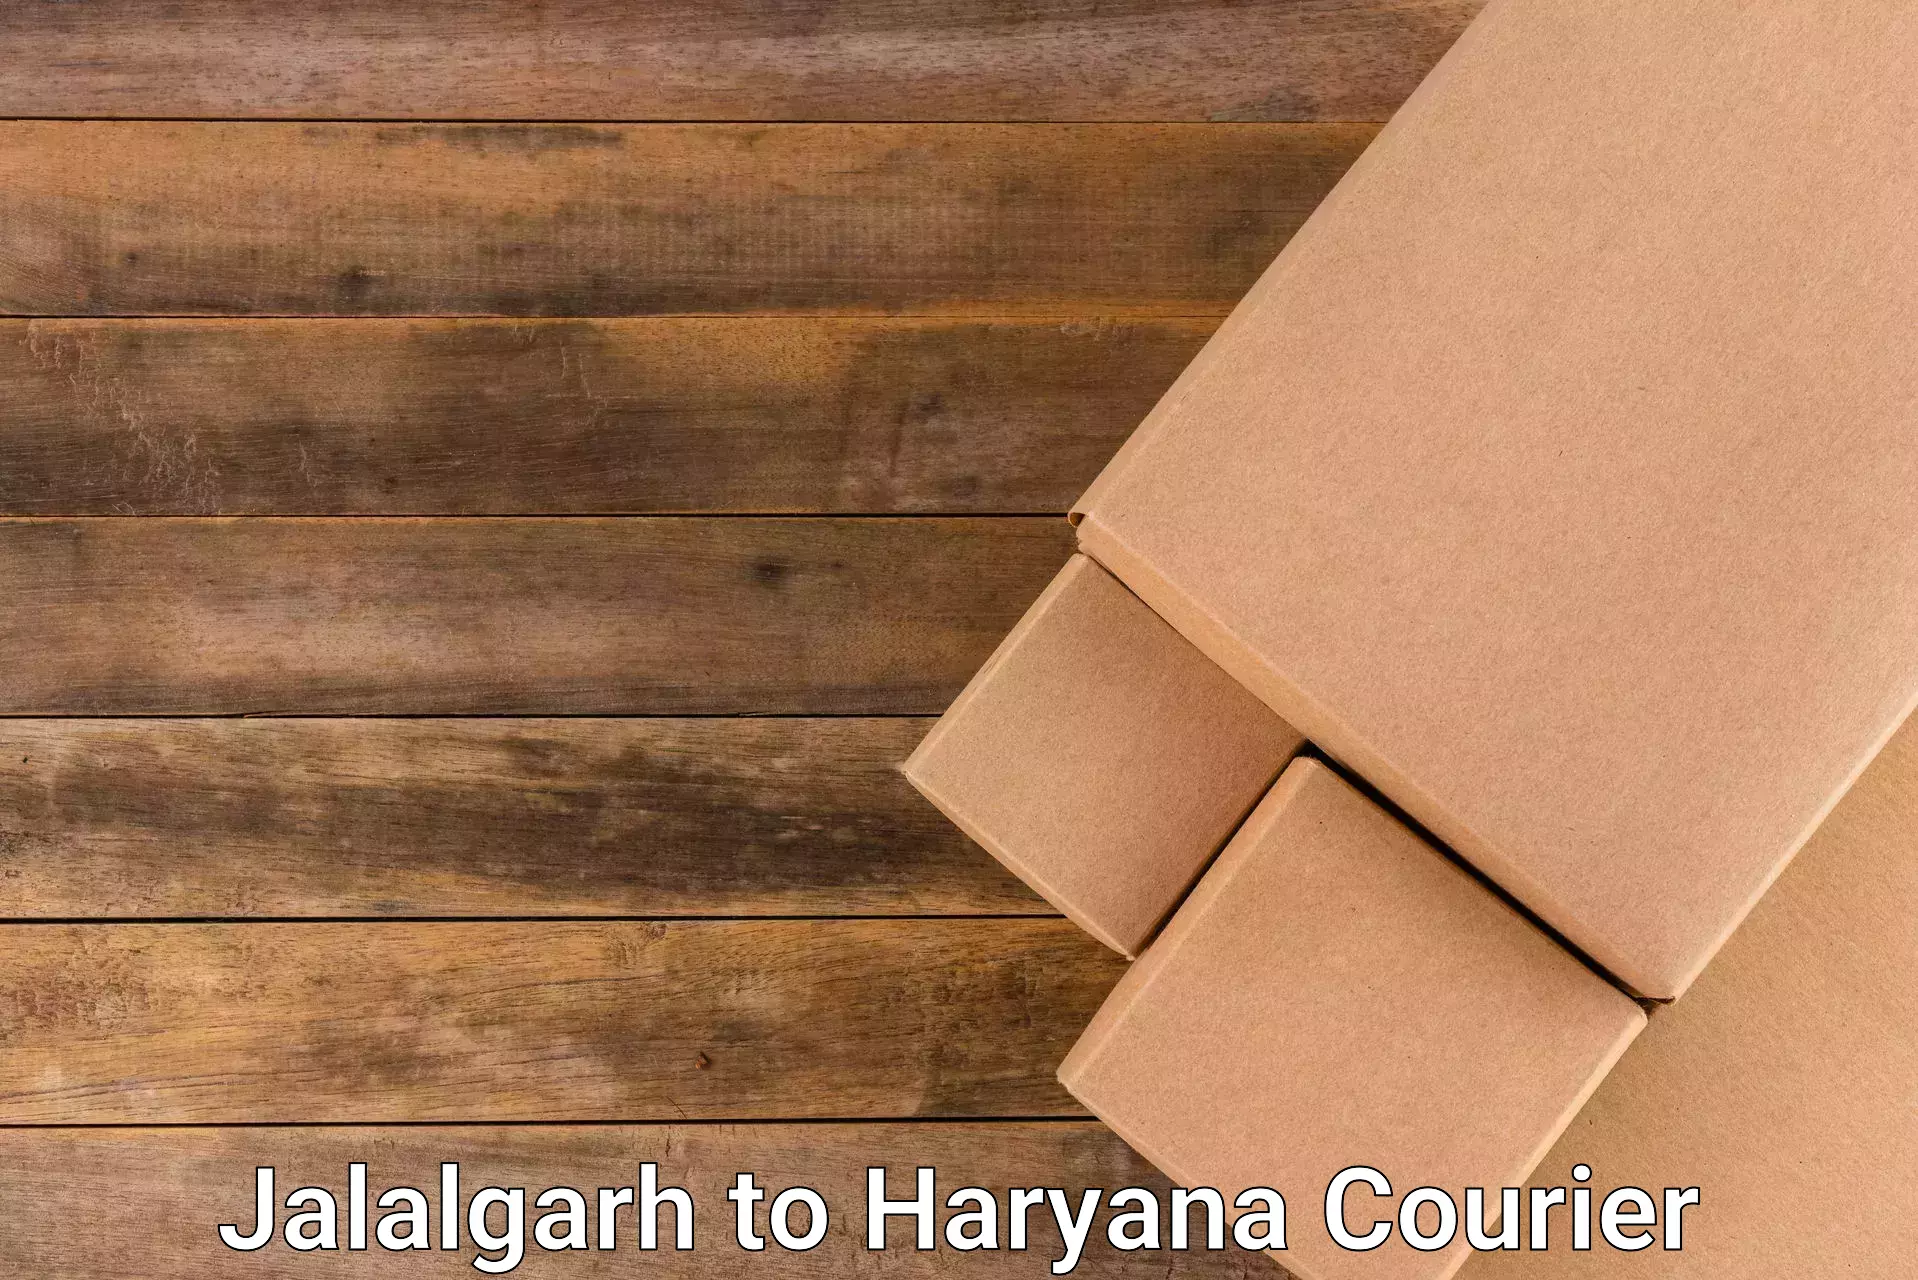 Courier service comparison Jalalgarh to Haryana